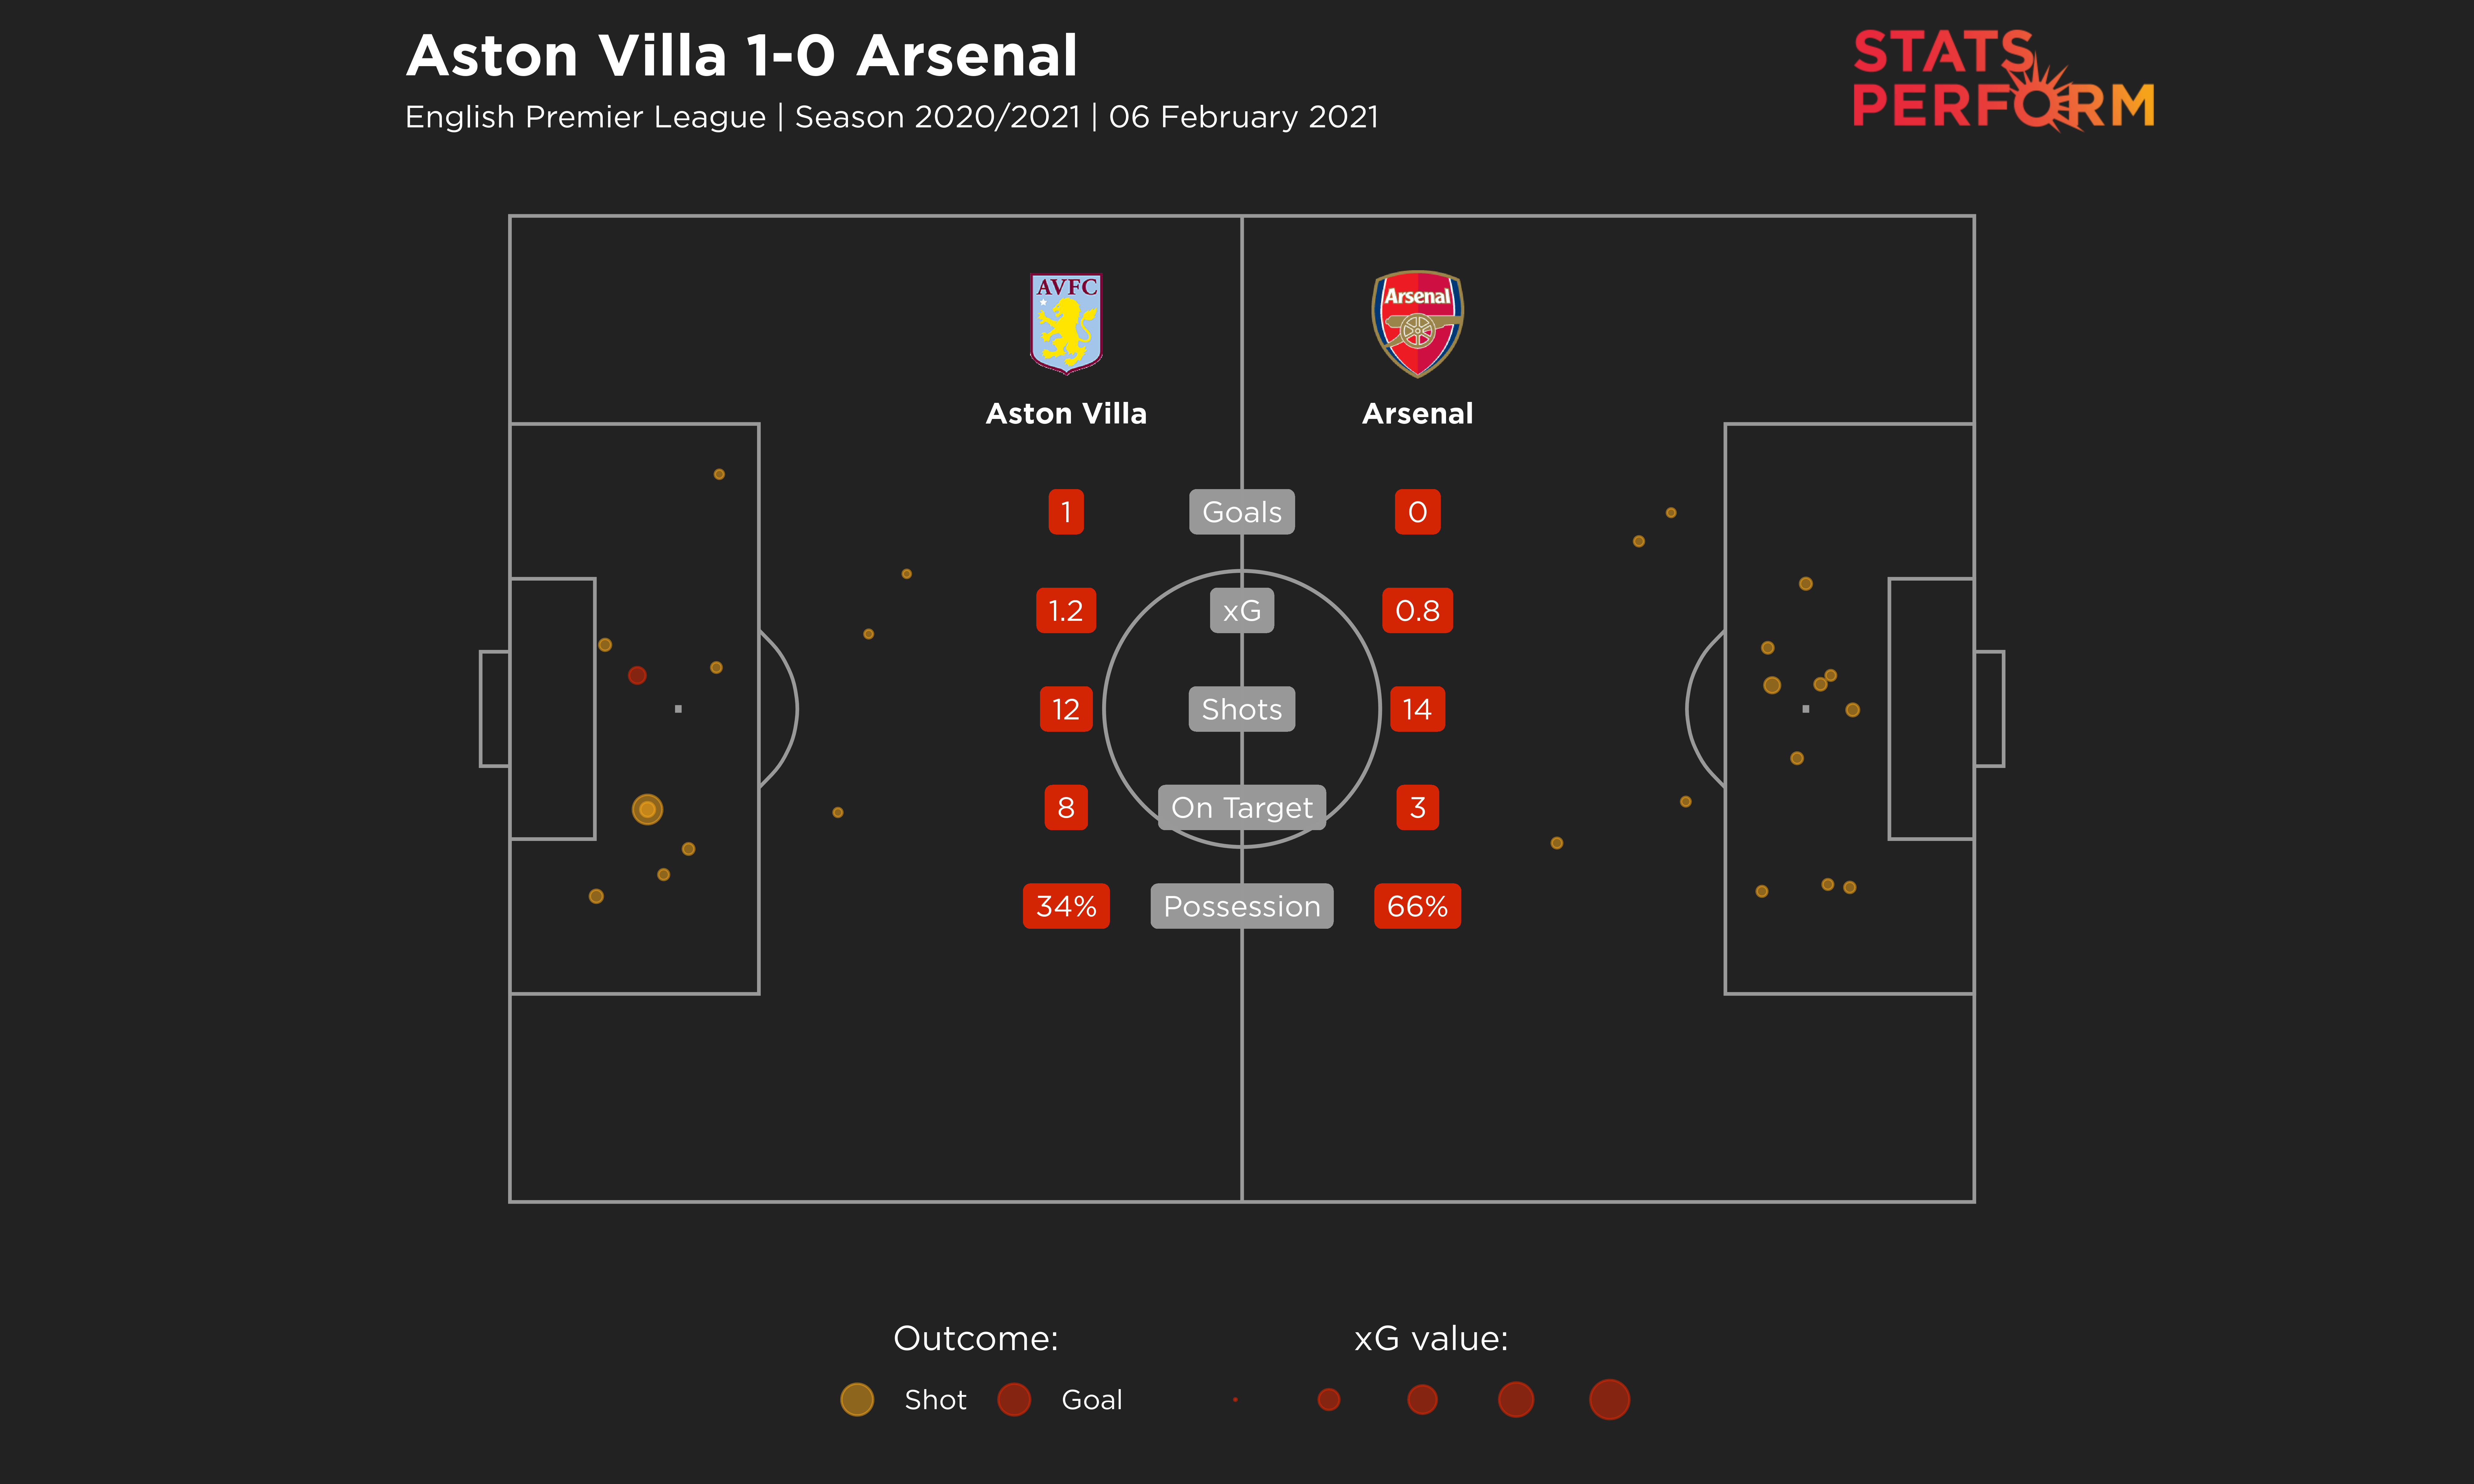 Aston Villa 1-0 Arsenal expected goals